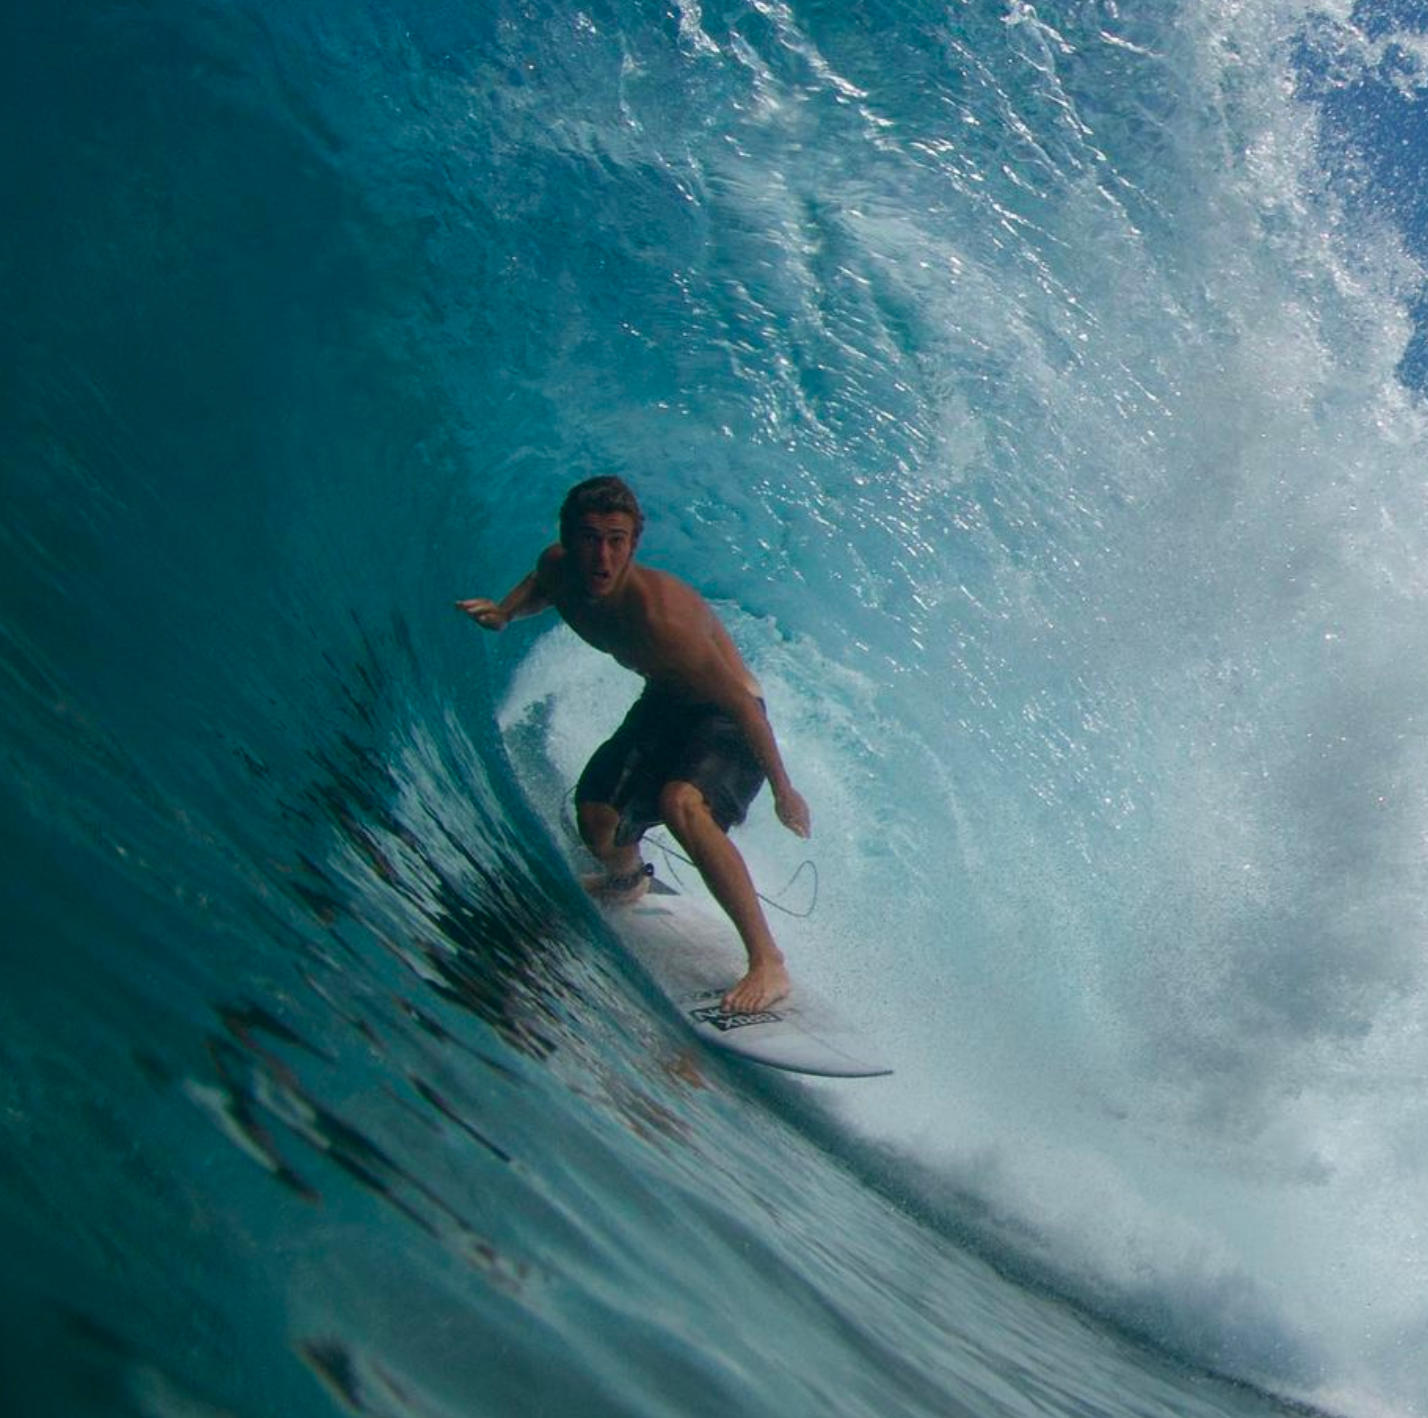 Tex Mitchell surfing in a wave